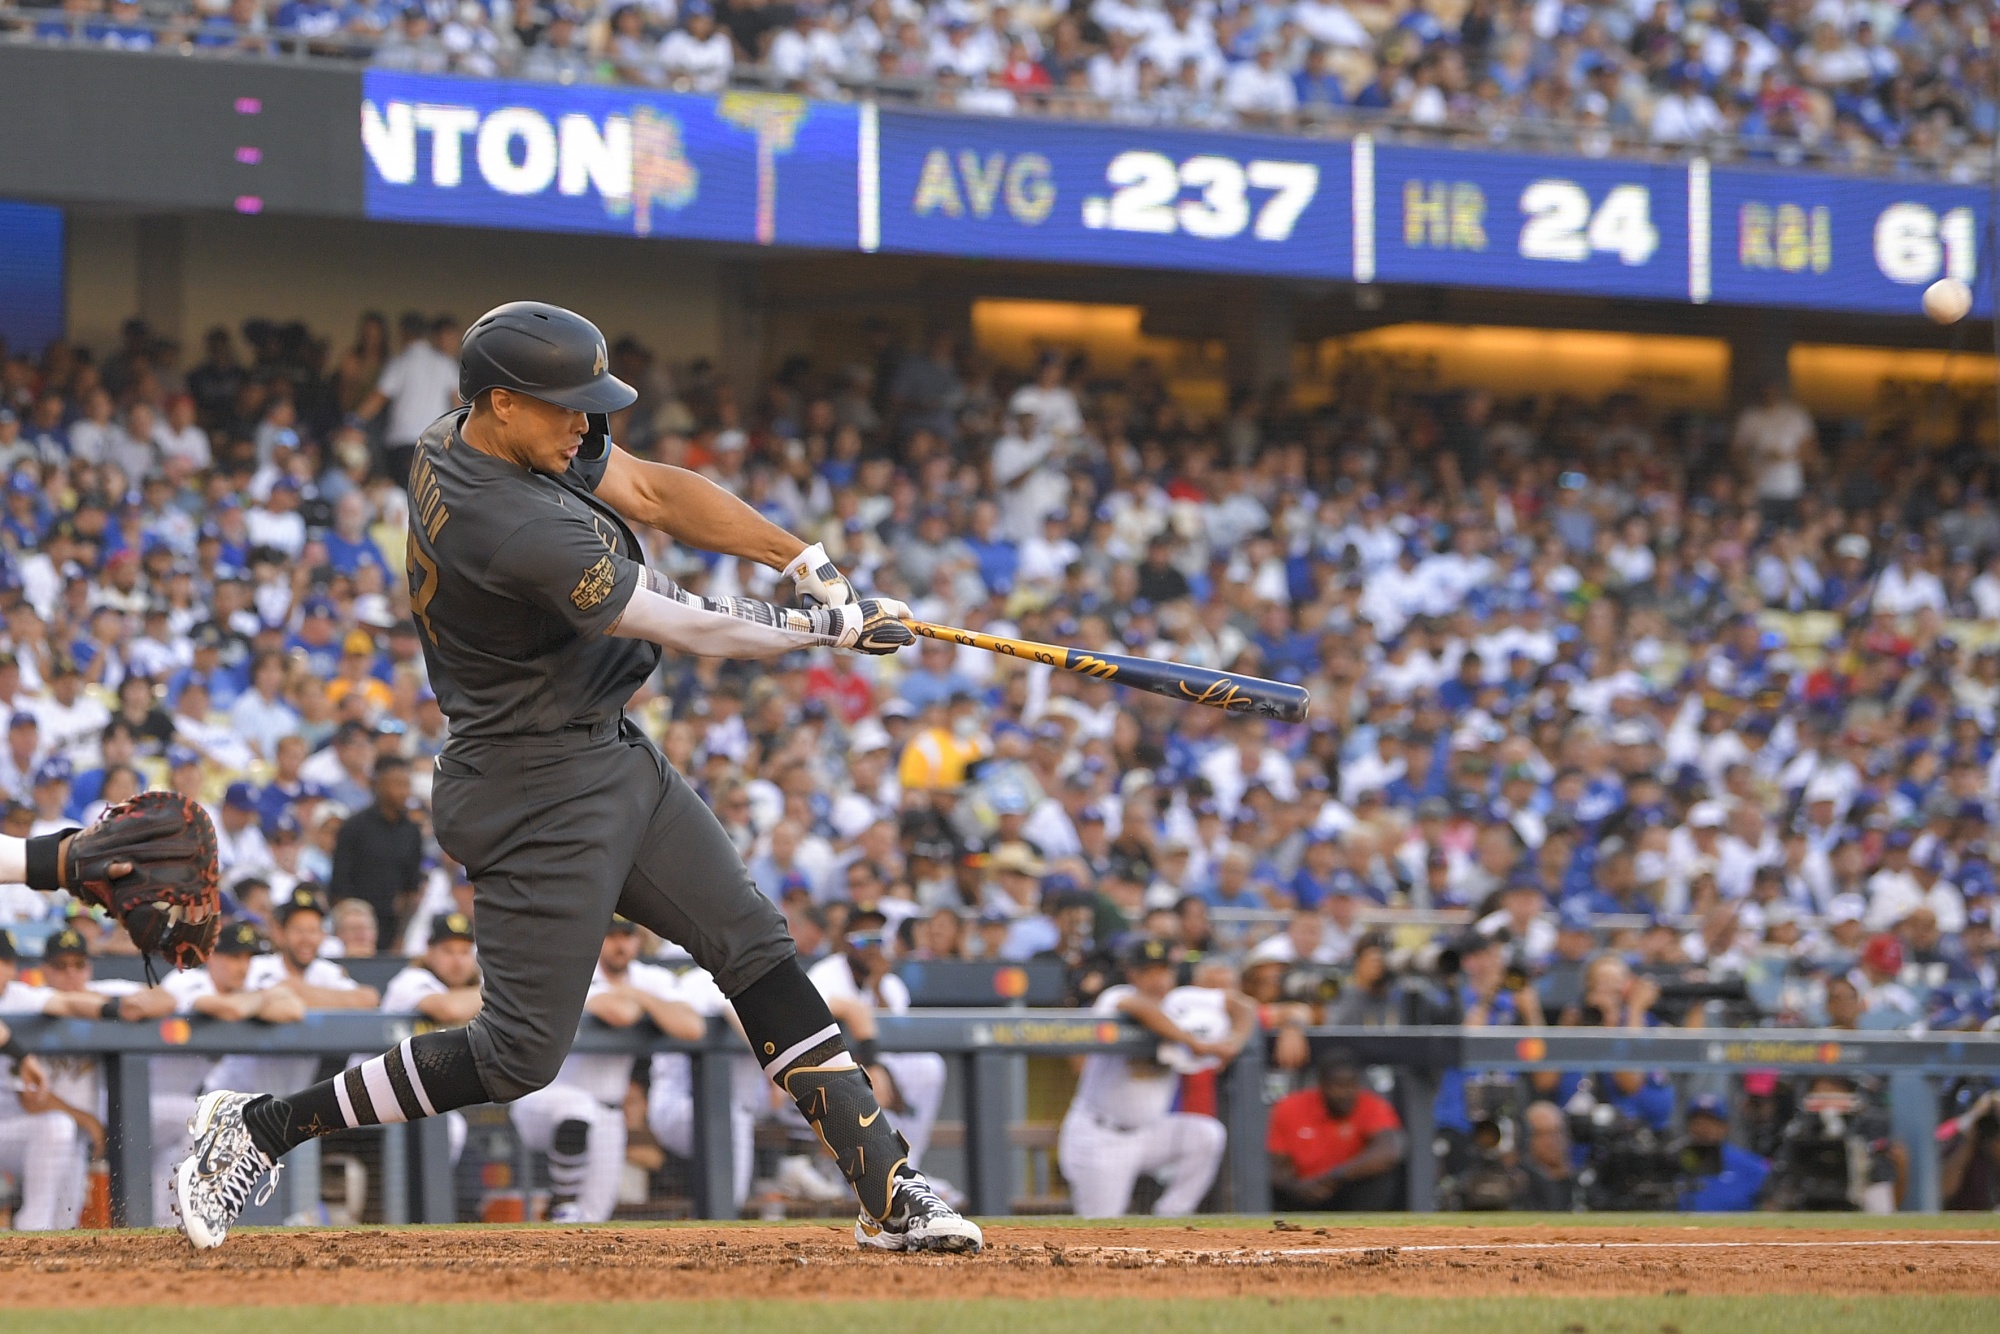 Yankees' Nestor Cortes throws shade at Boston Red Sox ahead of series